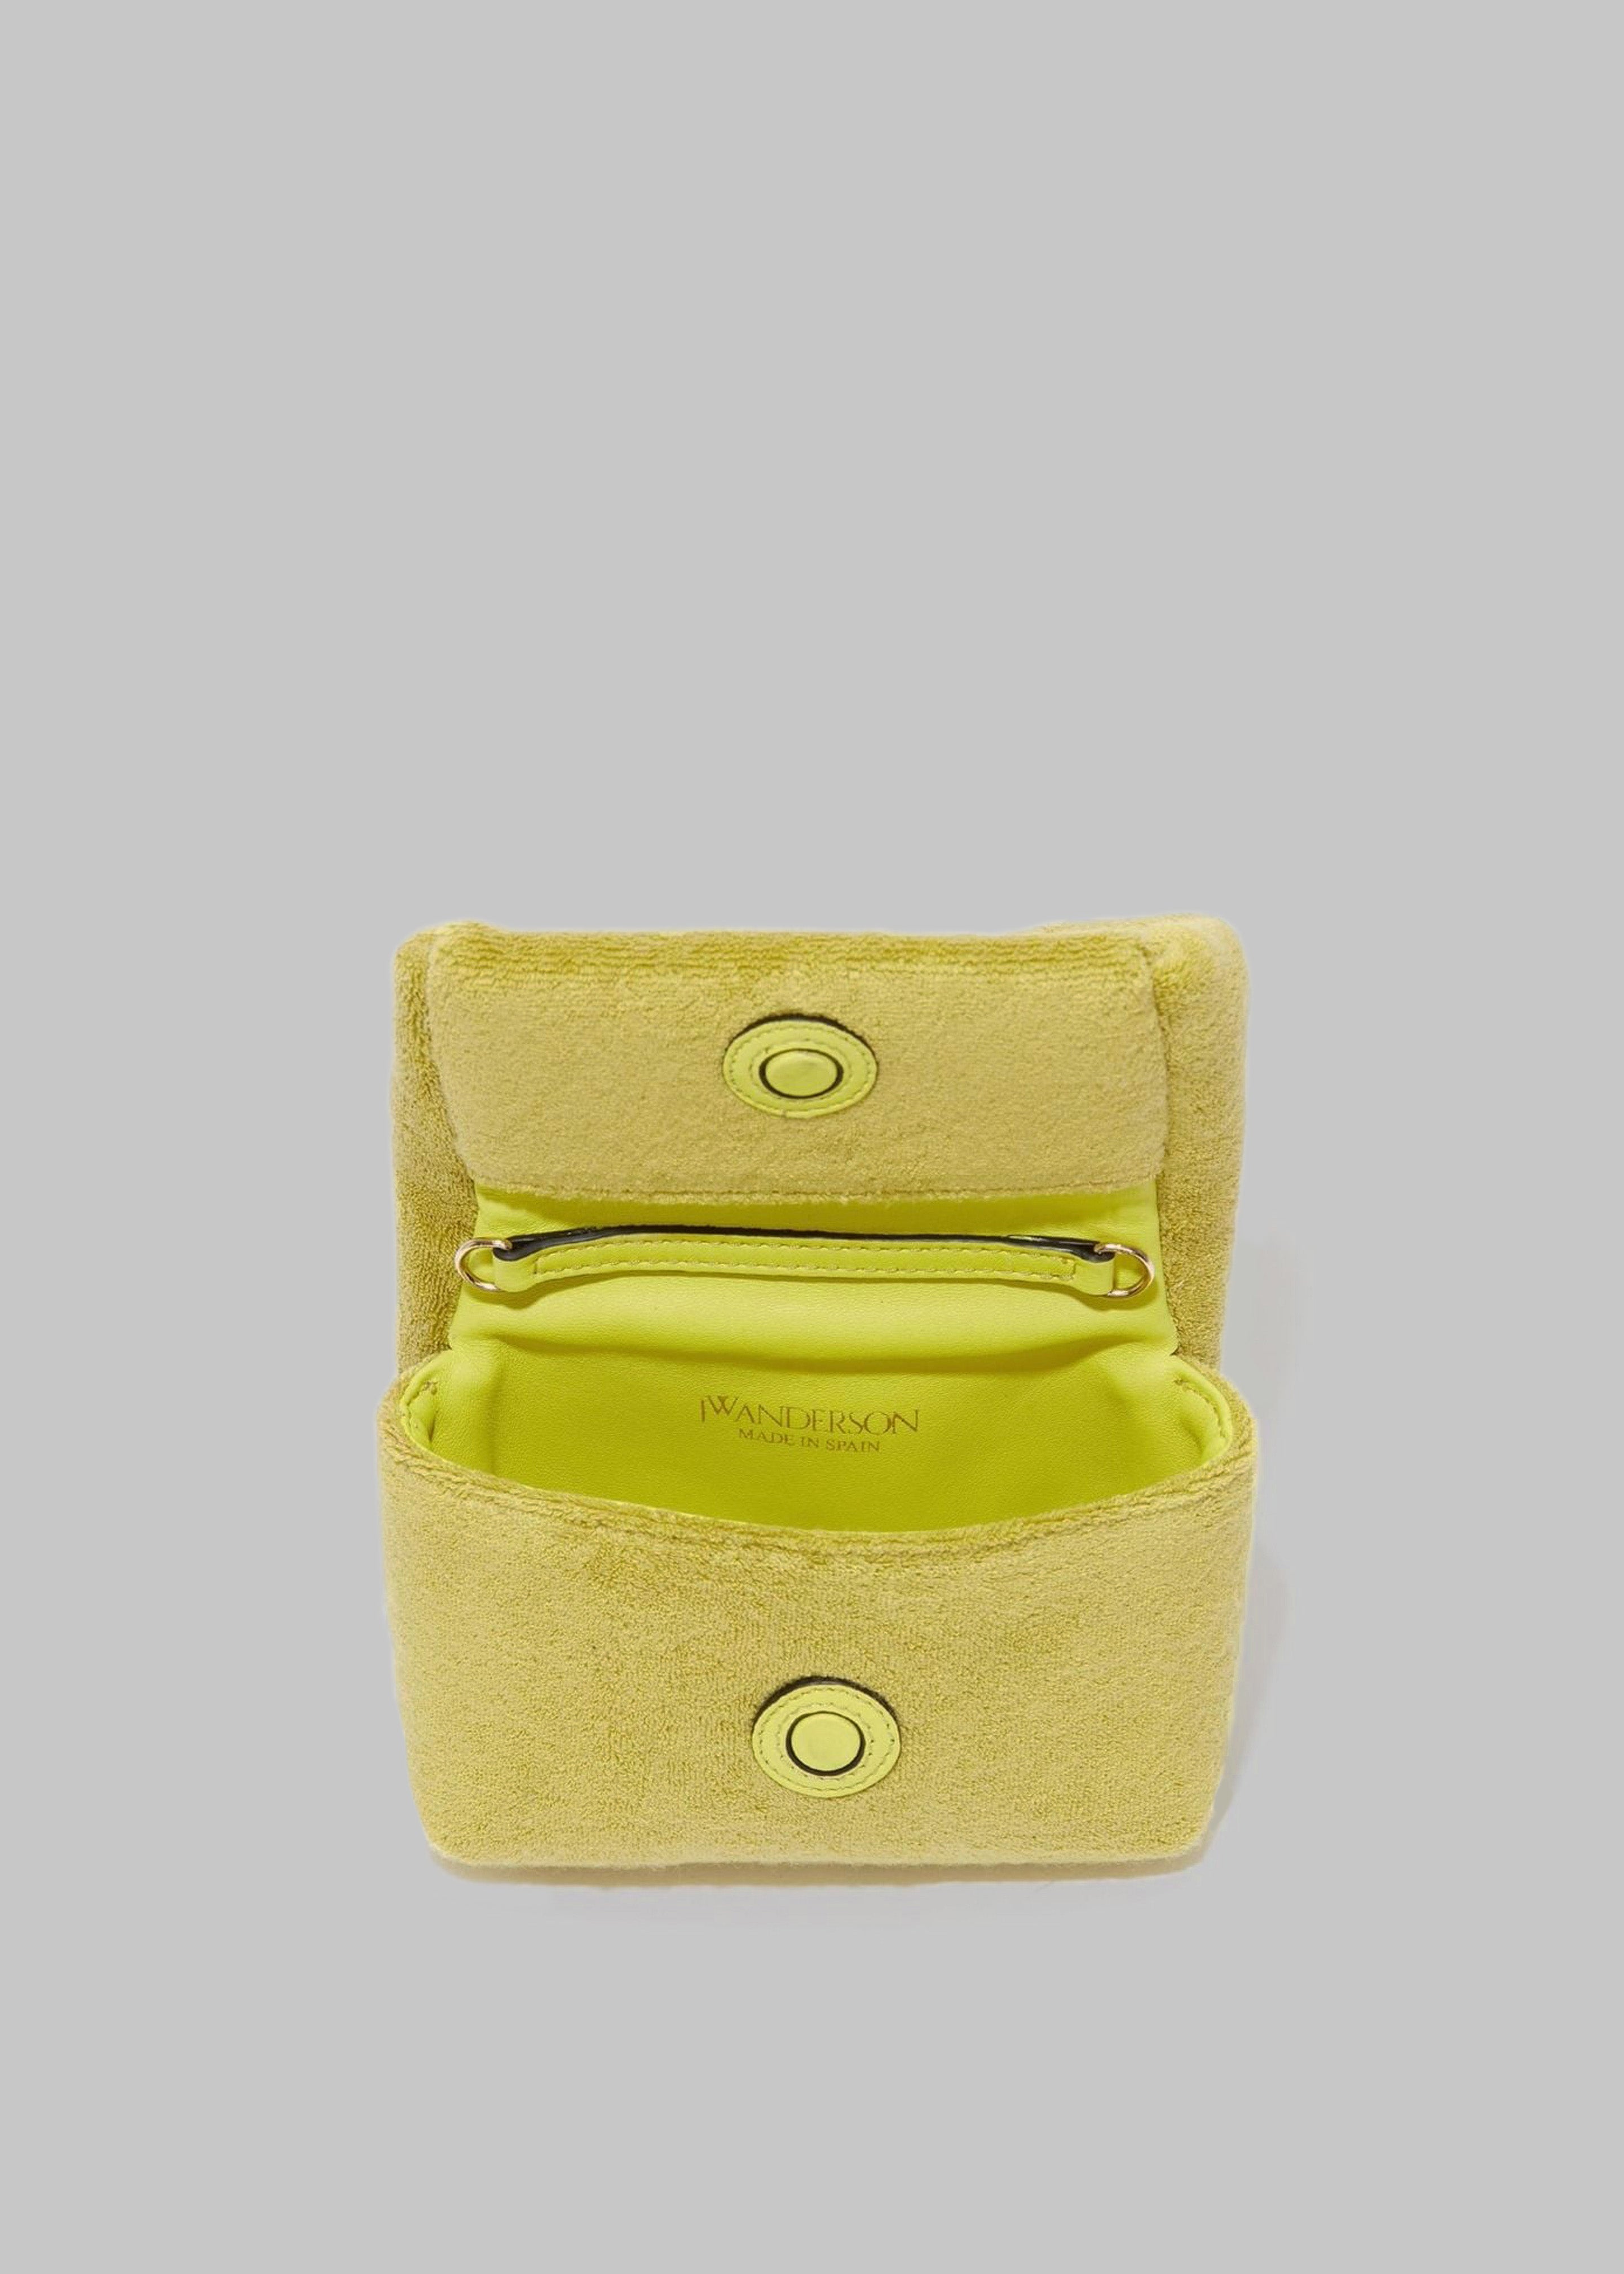 JW Anderson Nano Twister Bag - Lime - 6